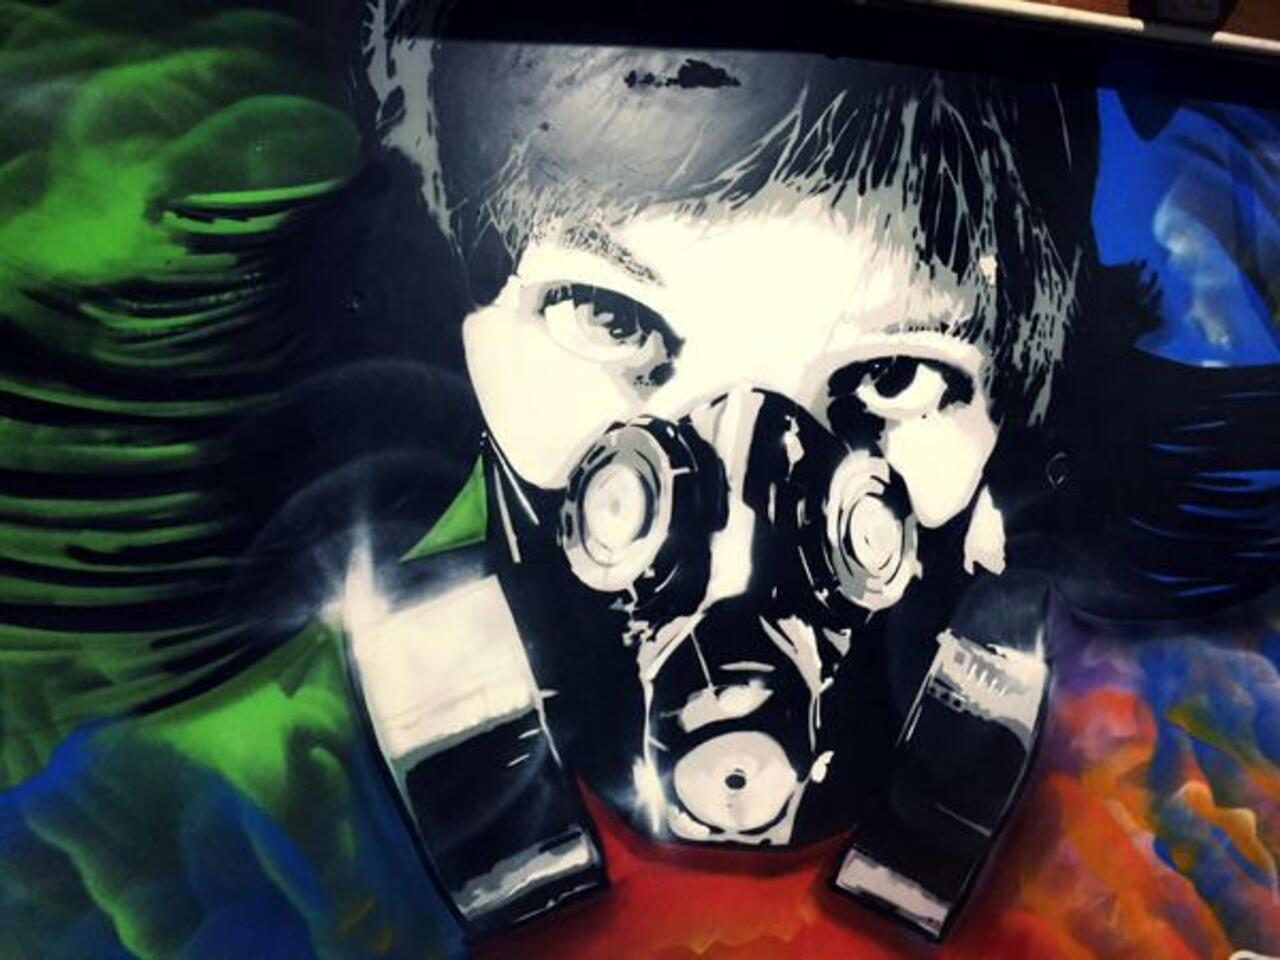 RT @StencilArtElite: Gas mask #stencil art in Bangor, Norrthern Ireland via @viswaste #streetart #graffiti #mural #urbanart #spraypaint http://t.co/9DYaTP92CO